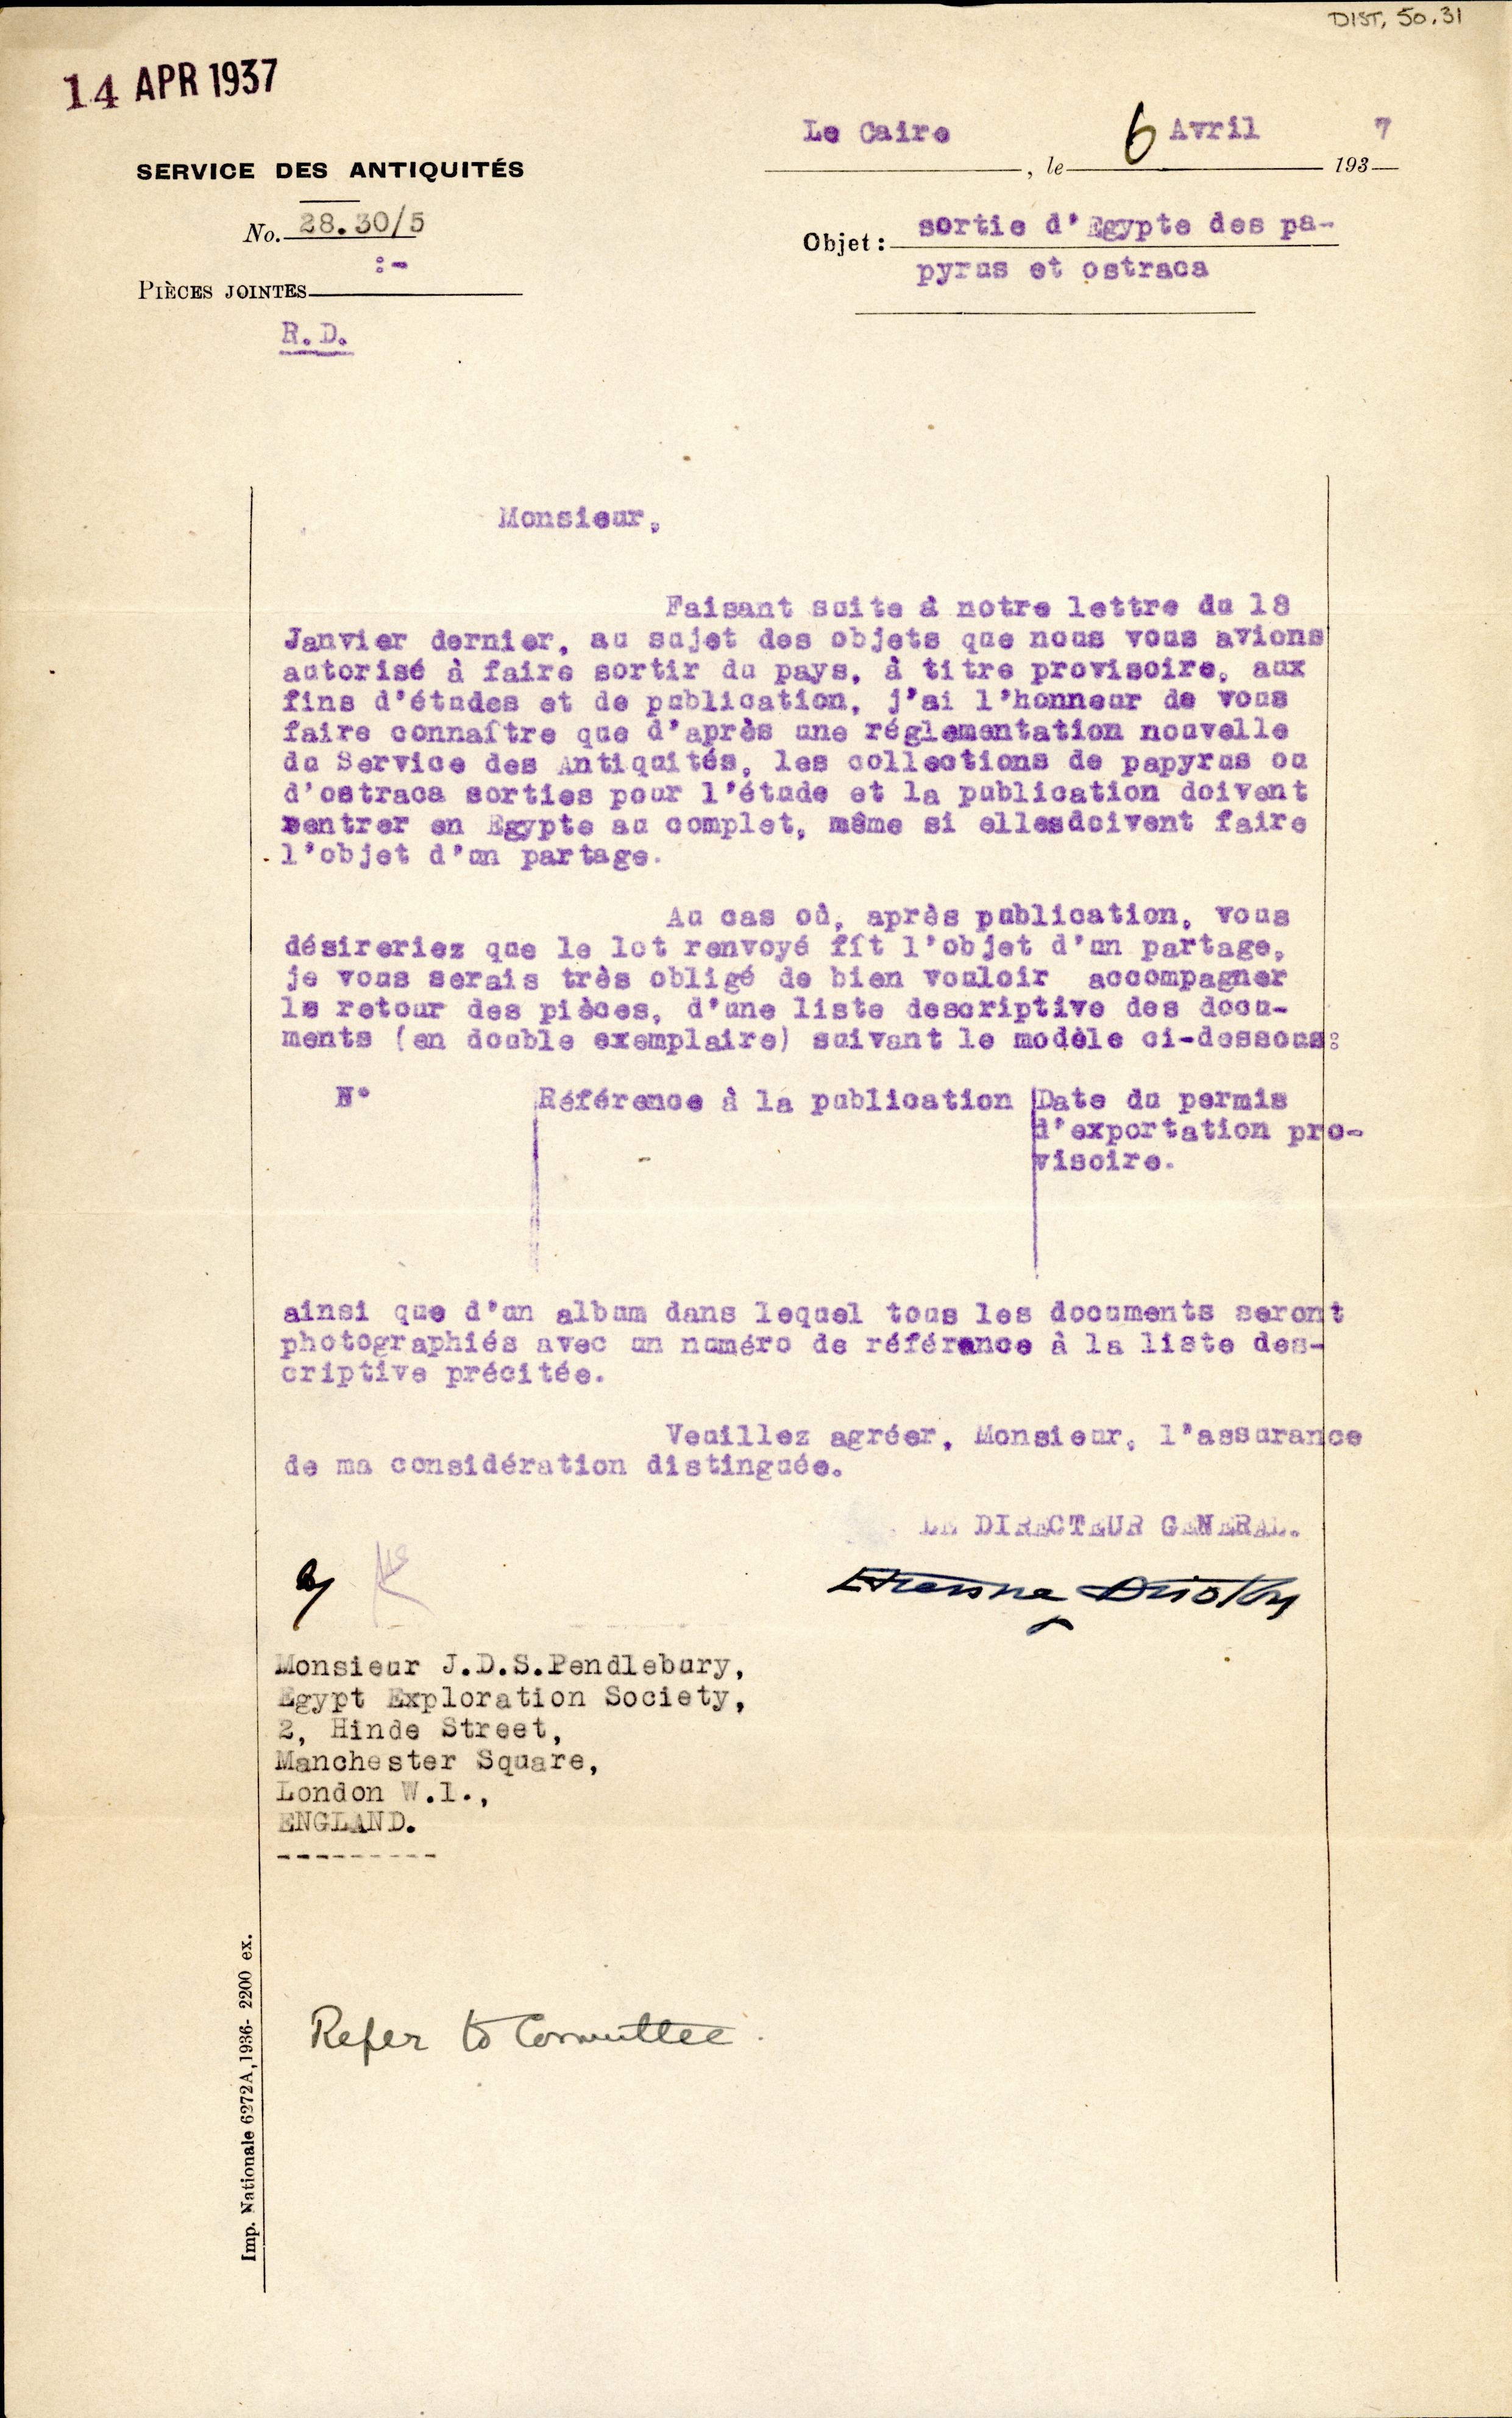 1926-39 correspondence with Antiquities Service DIST.50.31